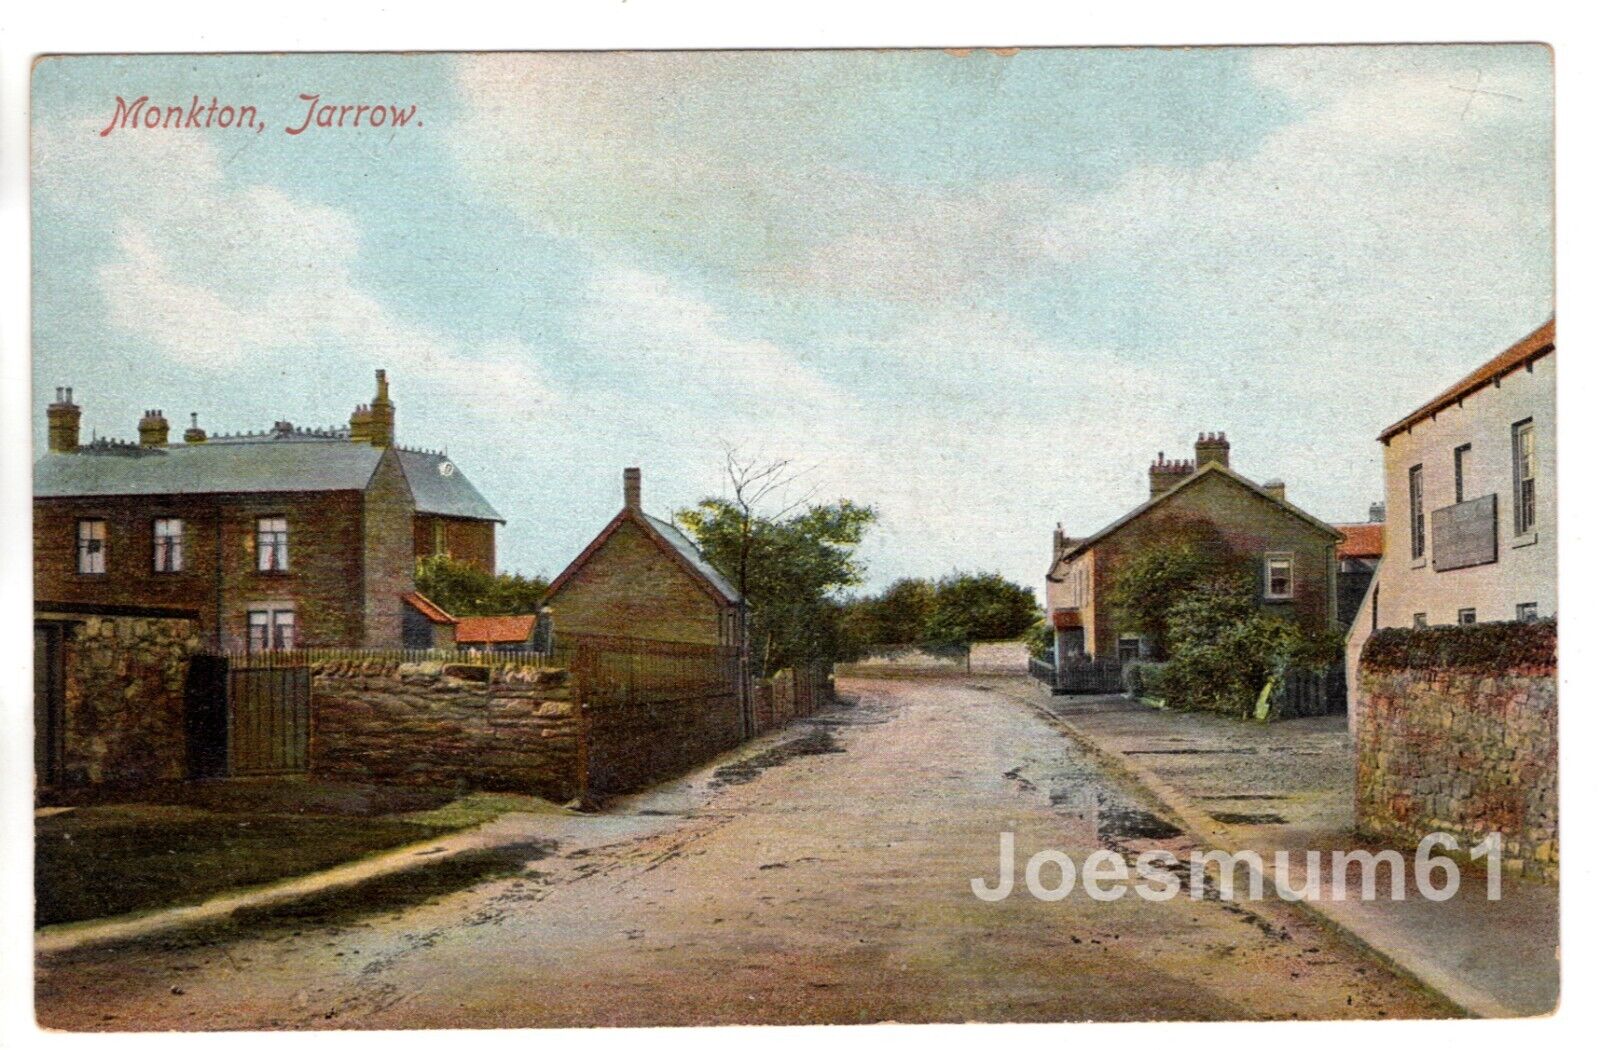 House Clearance - Early PC Monkton Village near Hebburn / Jarrow, Co. Durham.